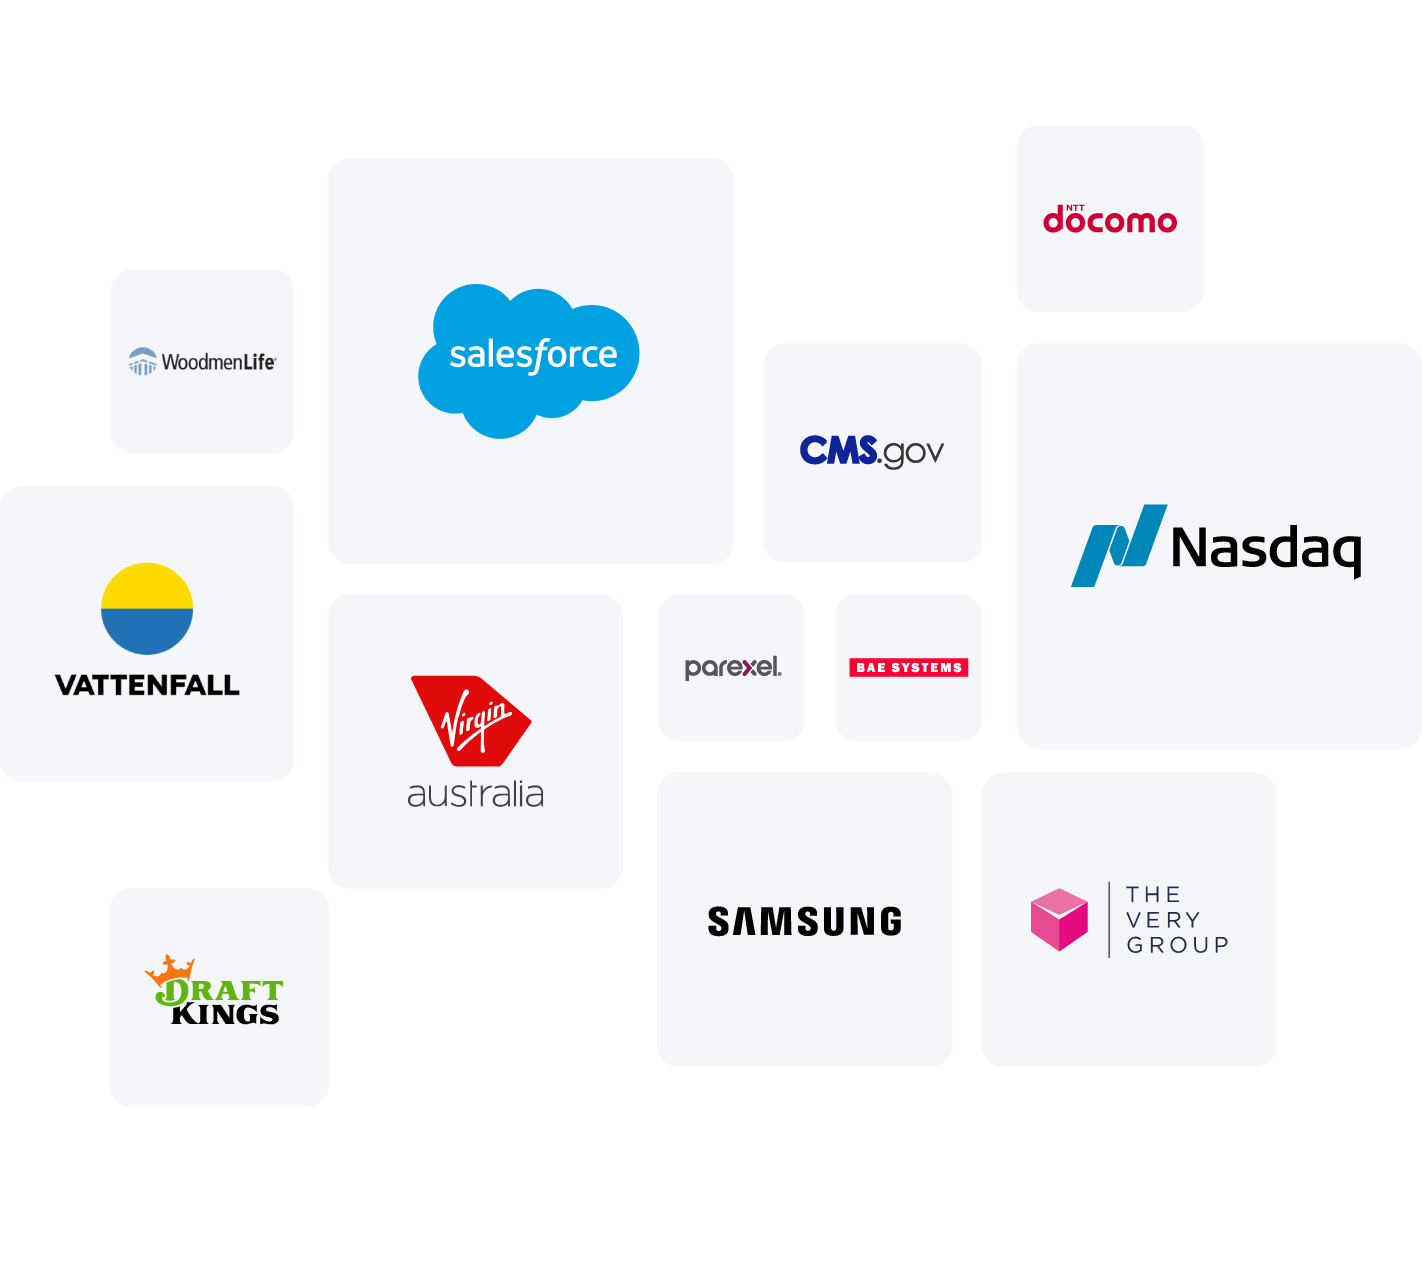 Logos of Alation customers including: Woodmen Life, Salesforce, Vattenfall, Virgin Australia, Draft Kings, Parexel, CMS.gov, BAE Systems, Samsung, NTT Docomo, Nasdaq, The Very Group